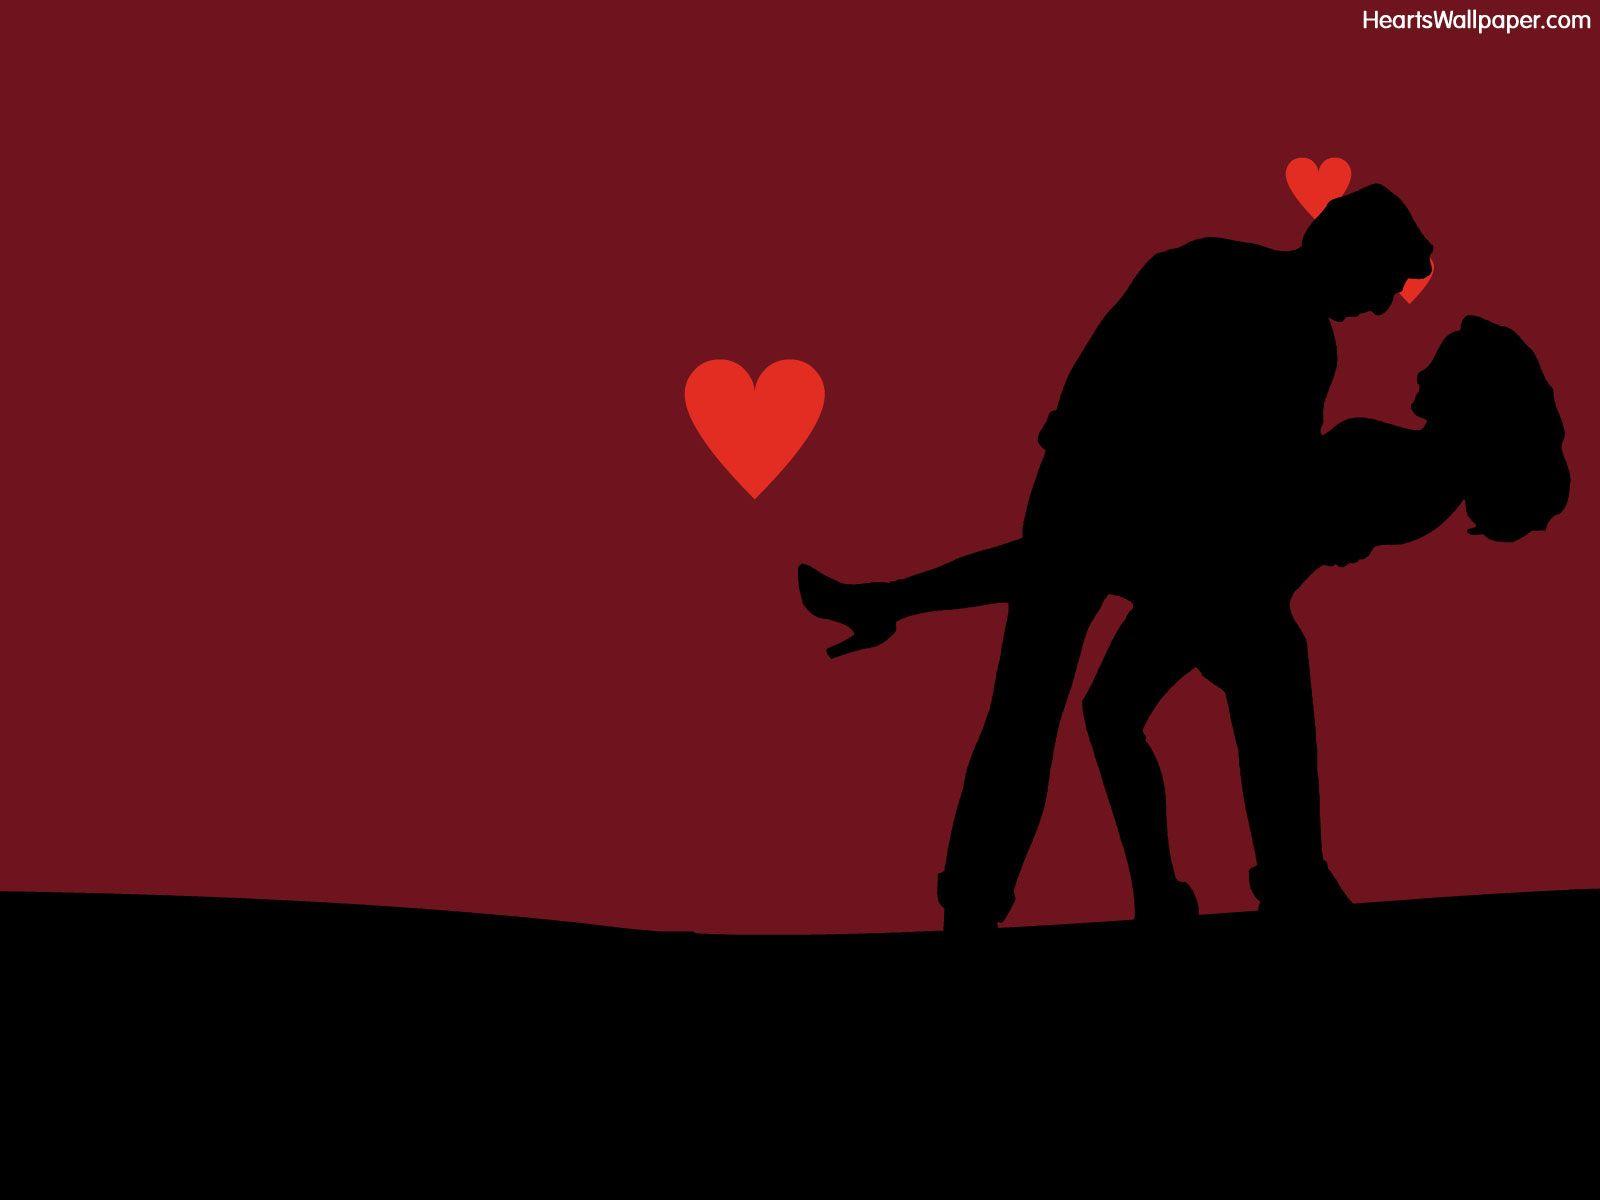 Romantic Couples Anime Wallpaper. Romantic Wallpaper. Chobirdokan